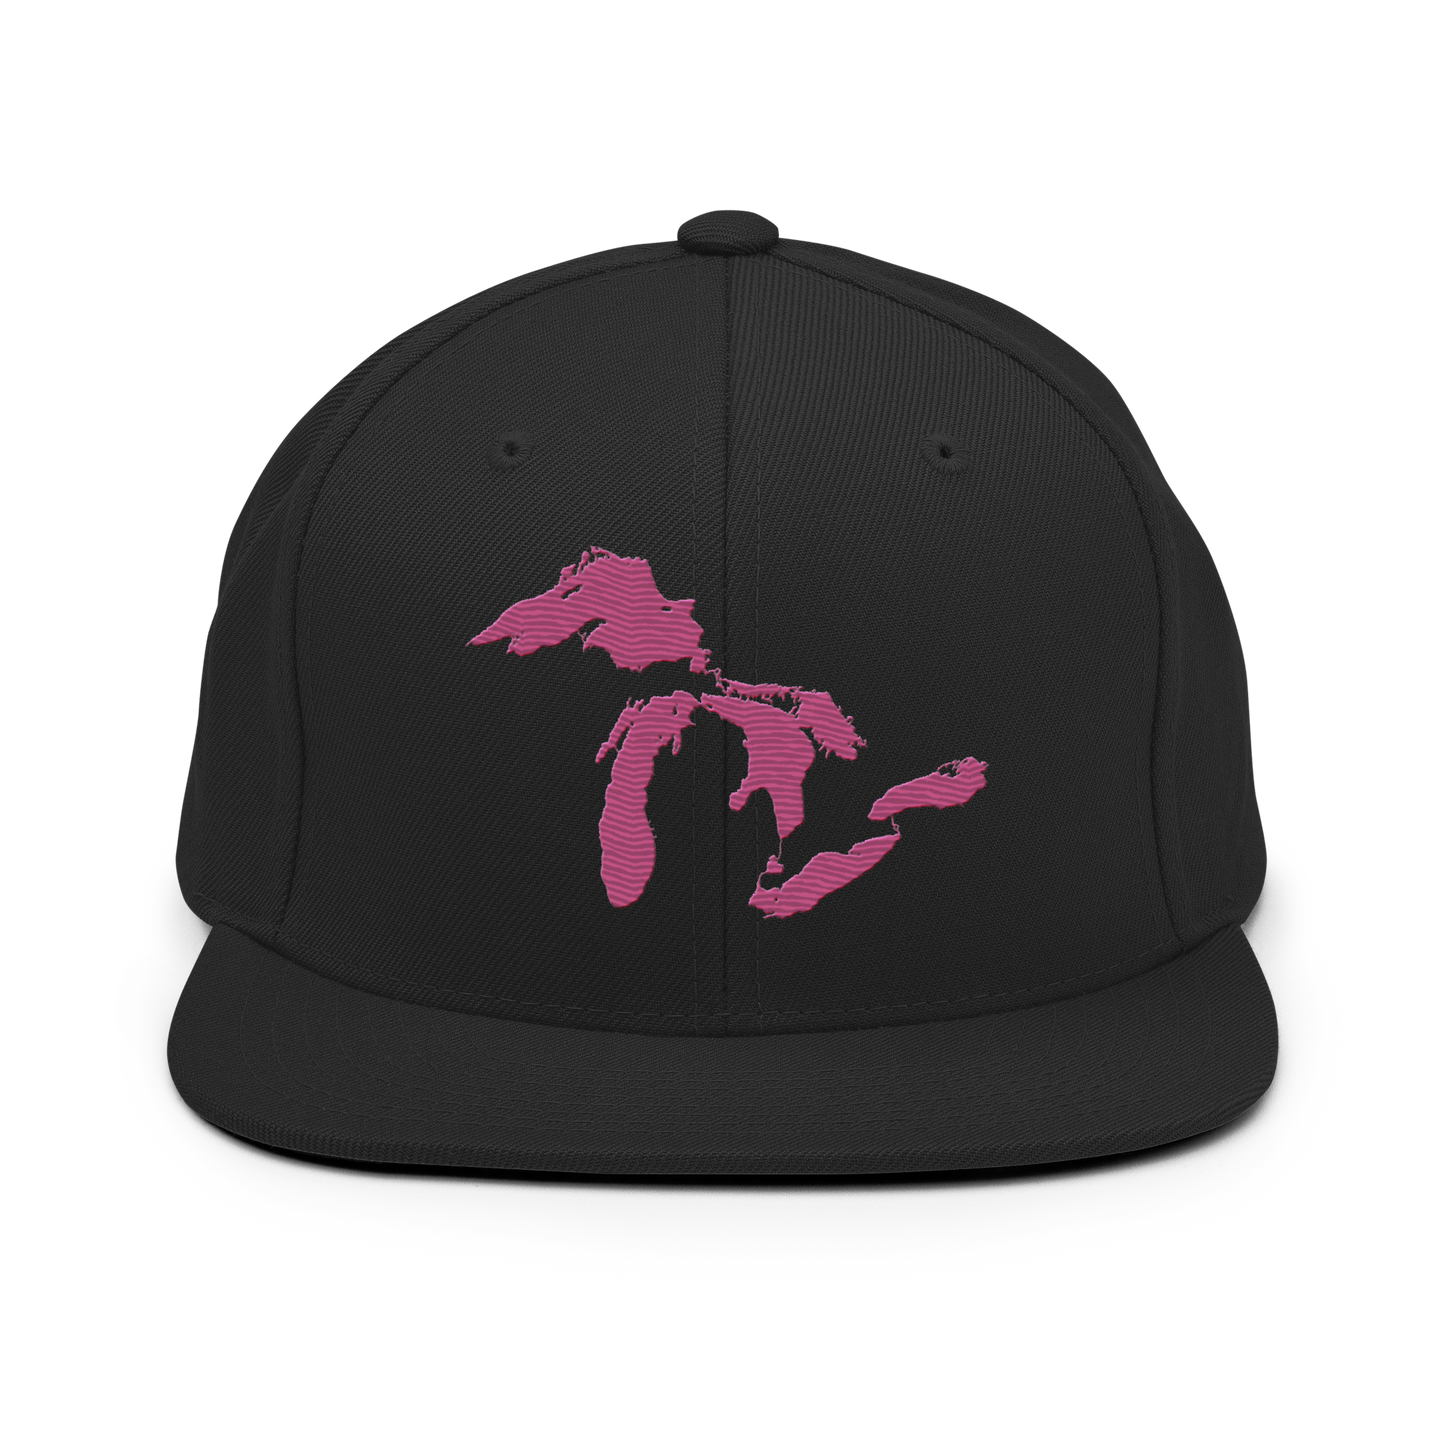 Great Lakes Vintage Snapback | Apple Blossom Pink